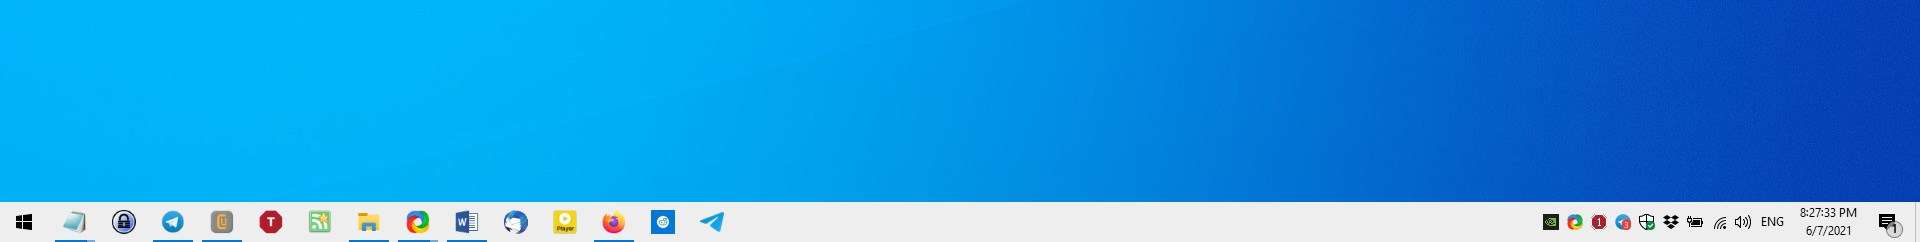 Windows 10 Taskbar icons